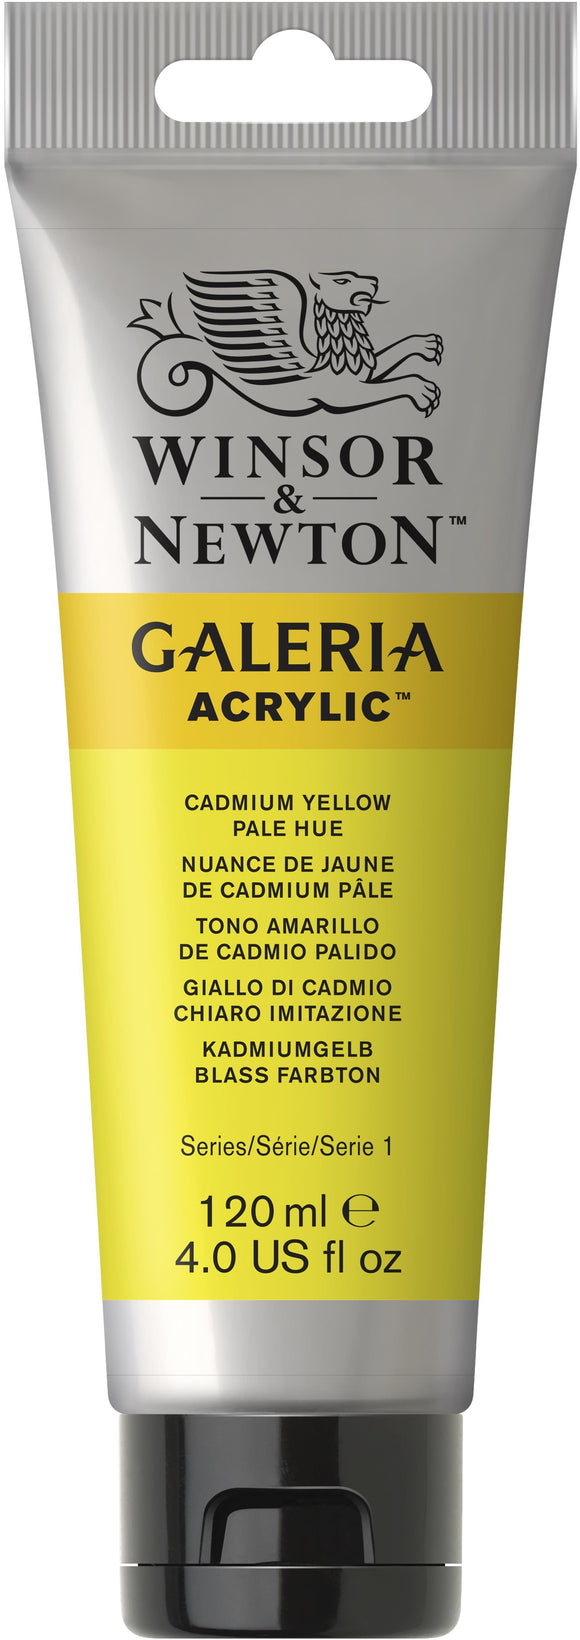 Winsor & Newton Galeria Acrylic Cadmium Yellow Pale Hue 120Ml